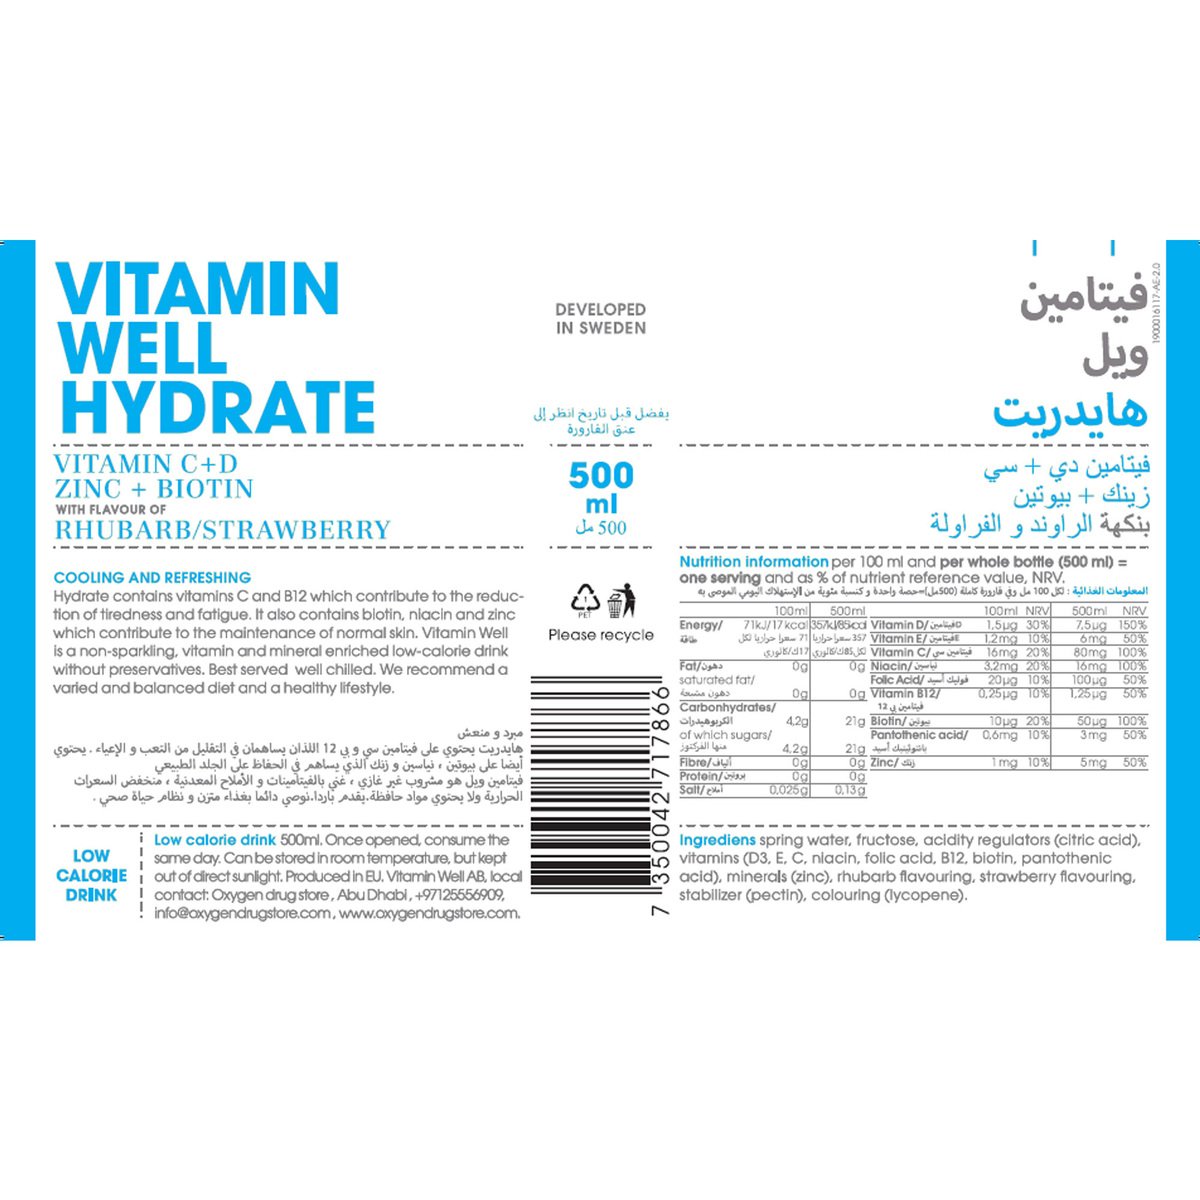 Vitamin Well Hydrate Rhubarb/Strawberry Drink 500 ml